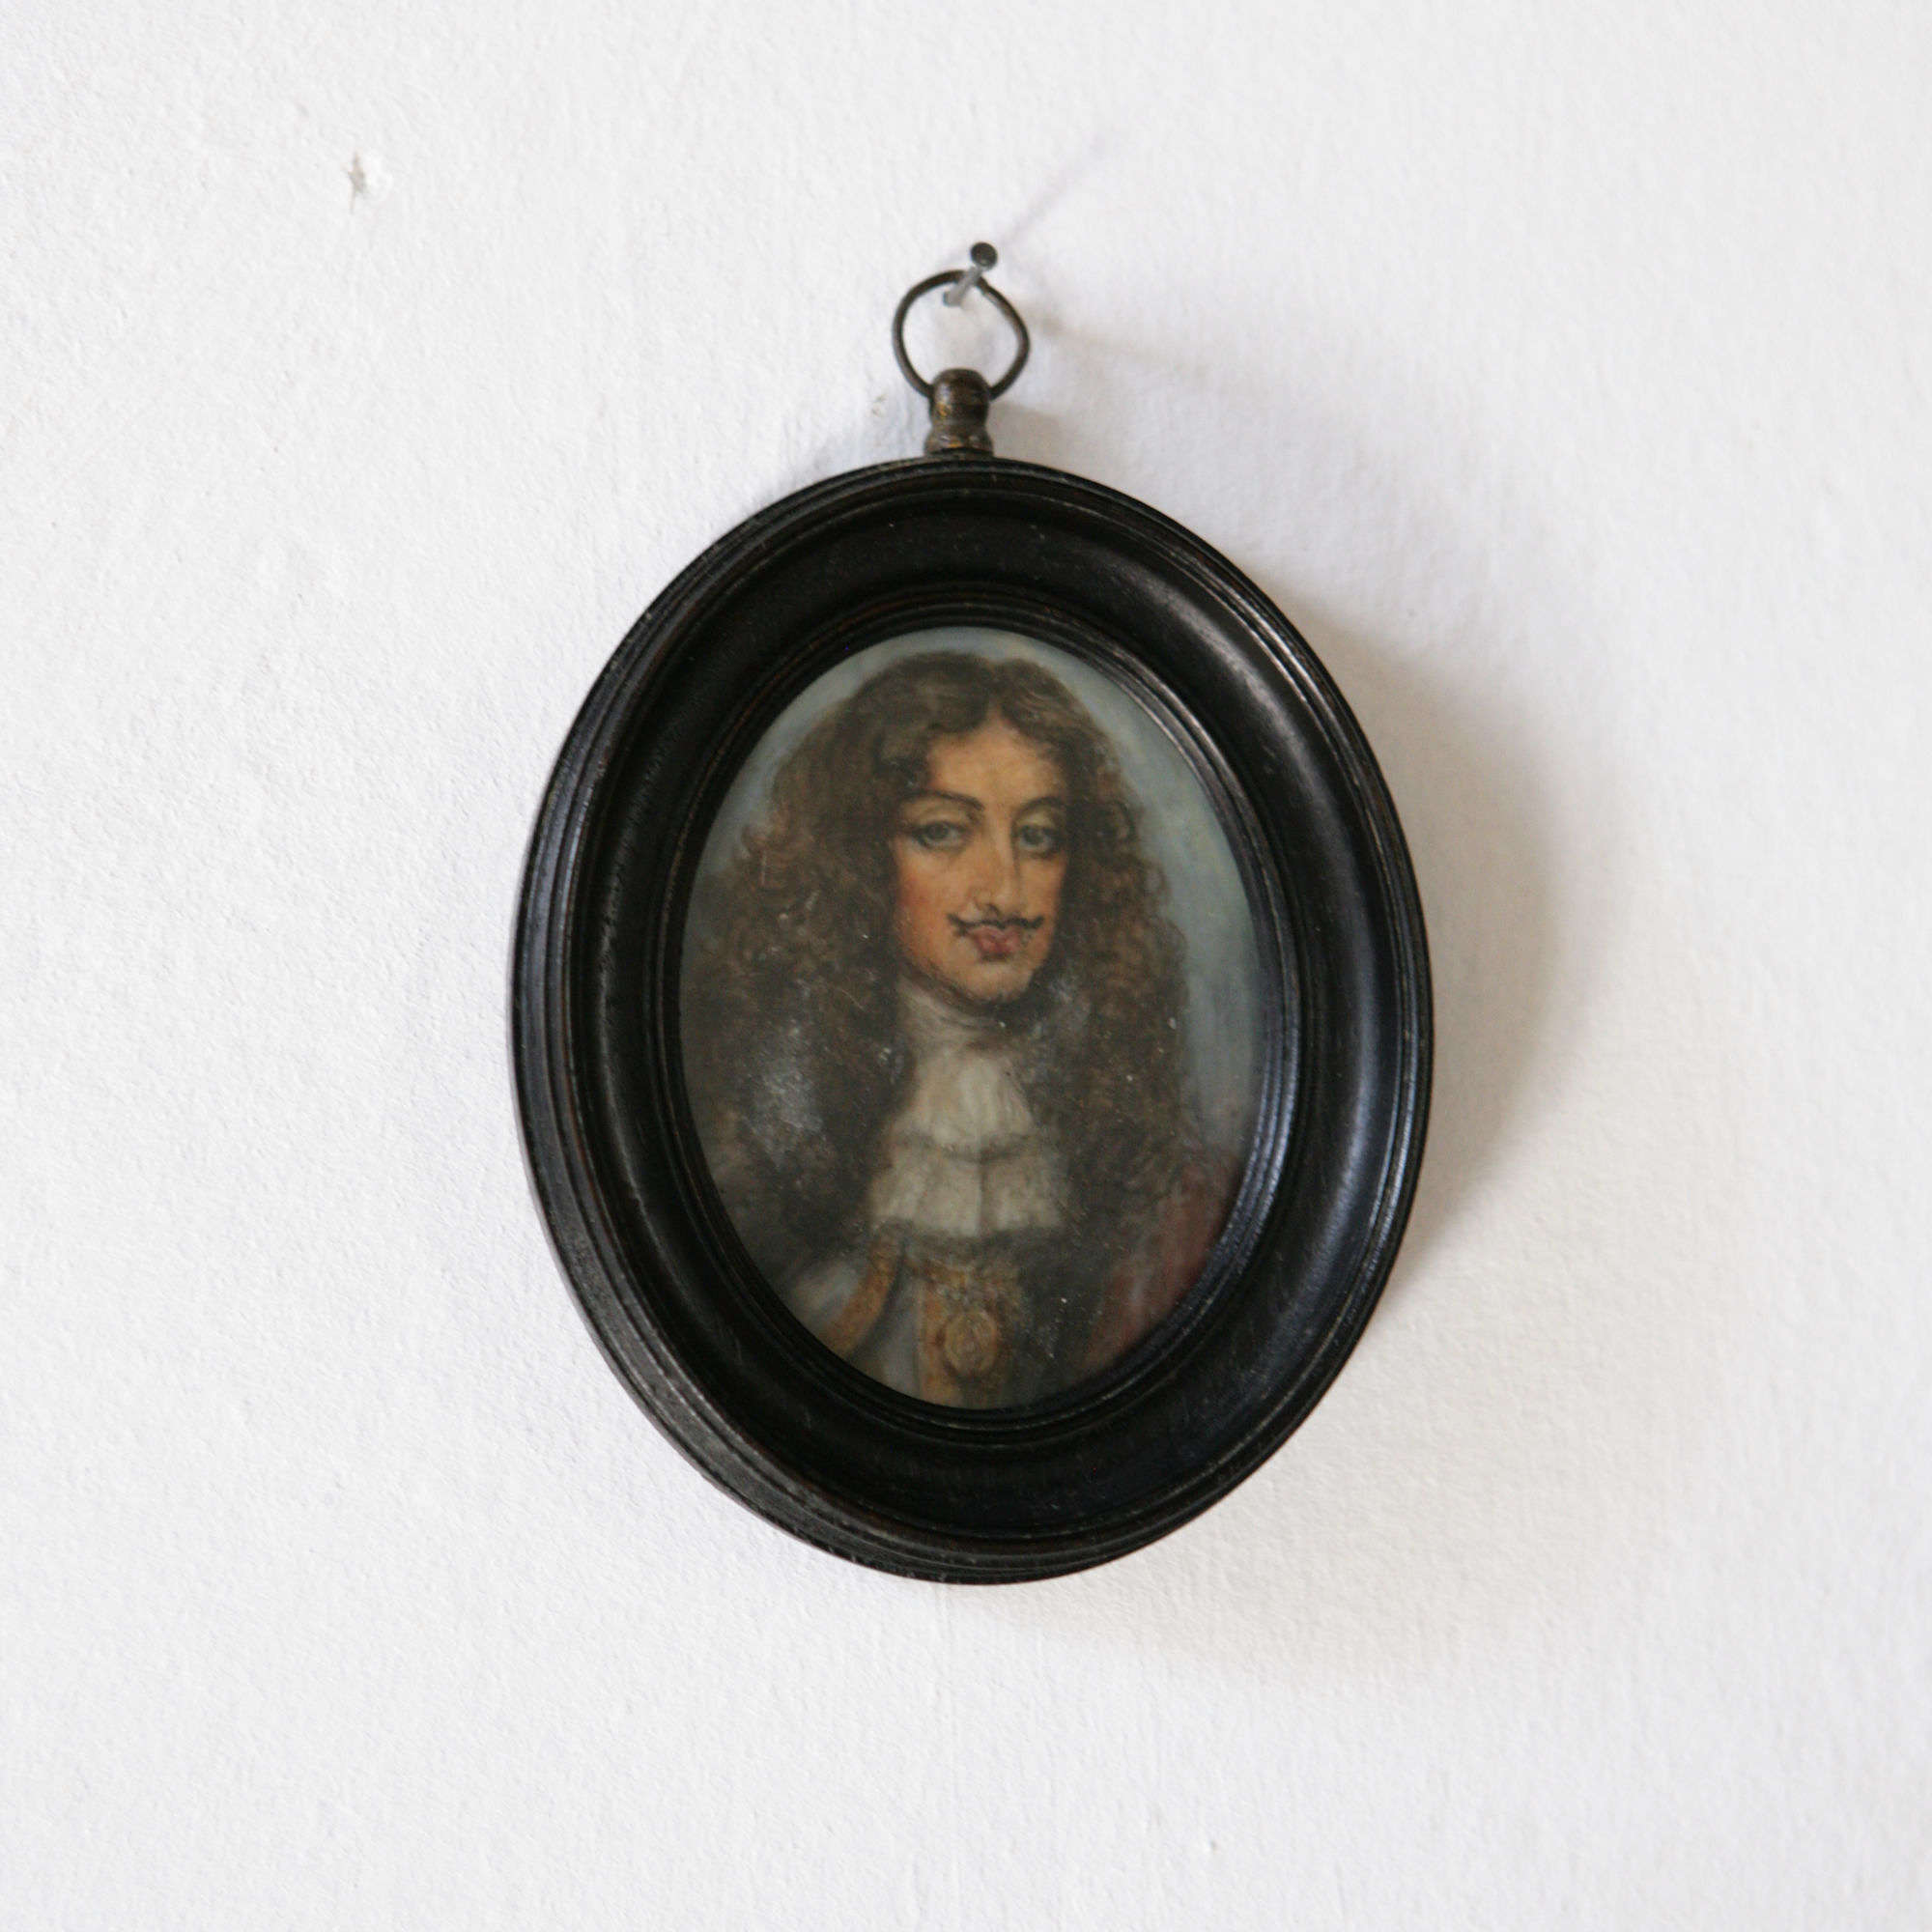 Miniature portrait of Charles II